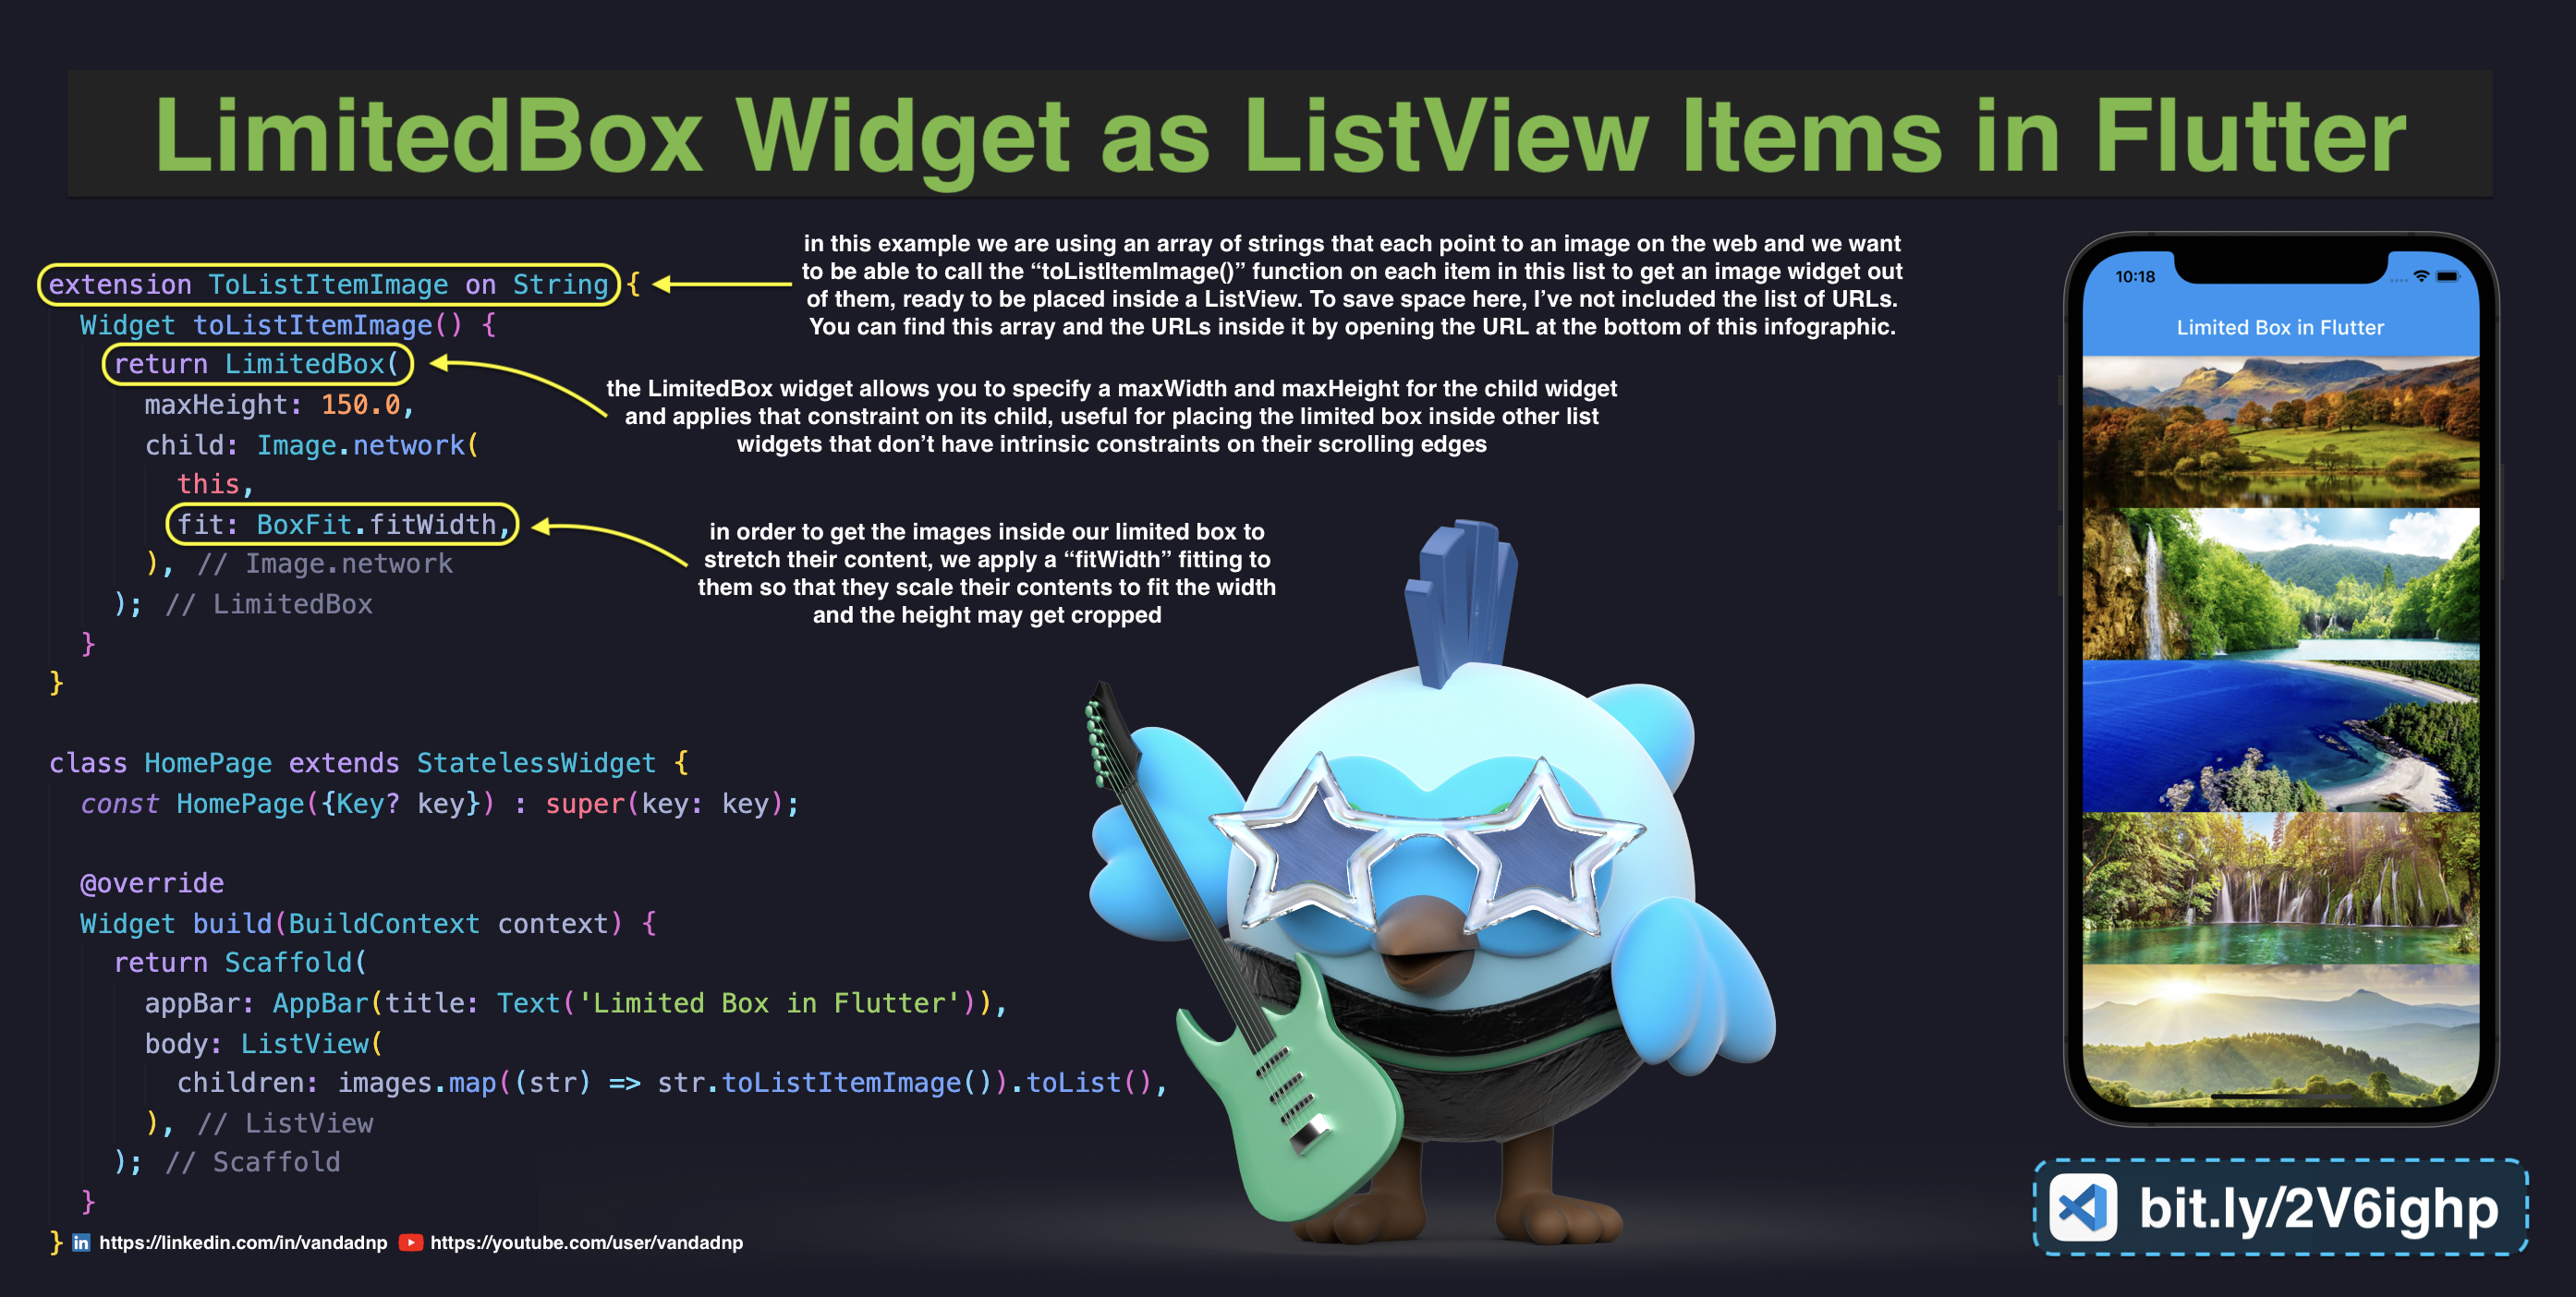 limitedbox-widget-as-listview-items-in-flutter.jpg